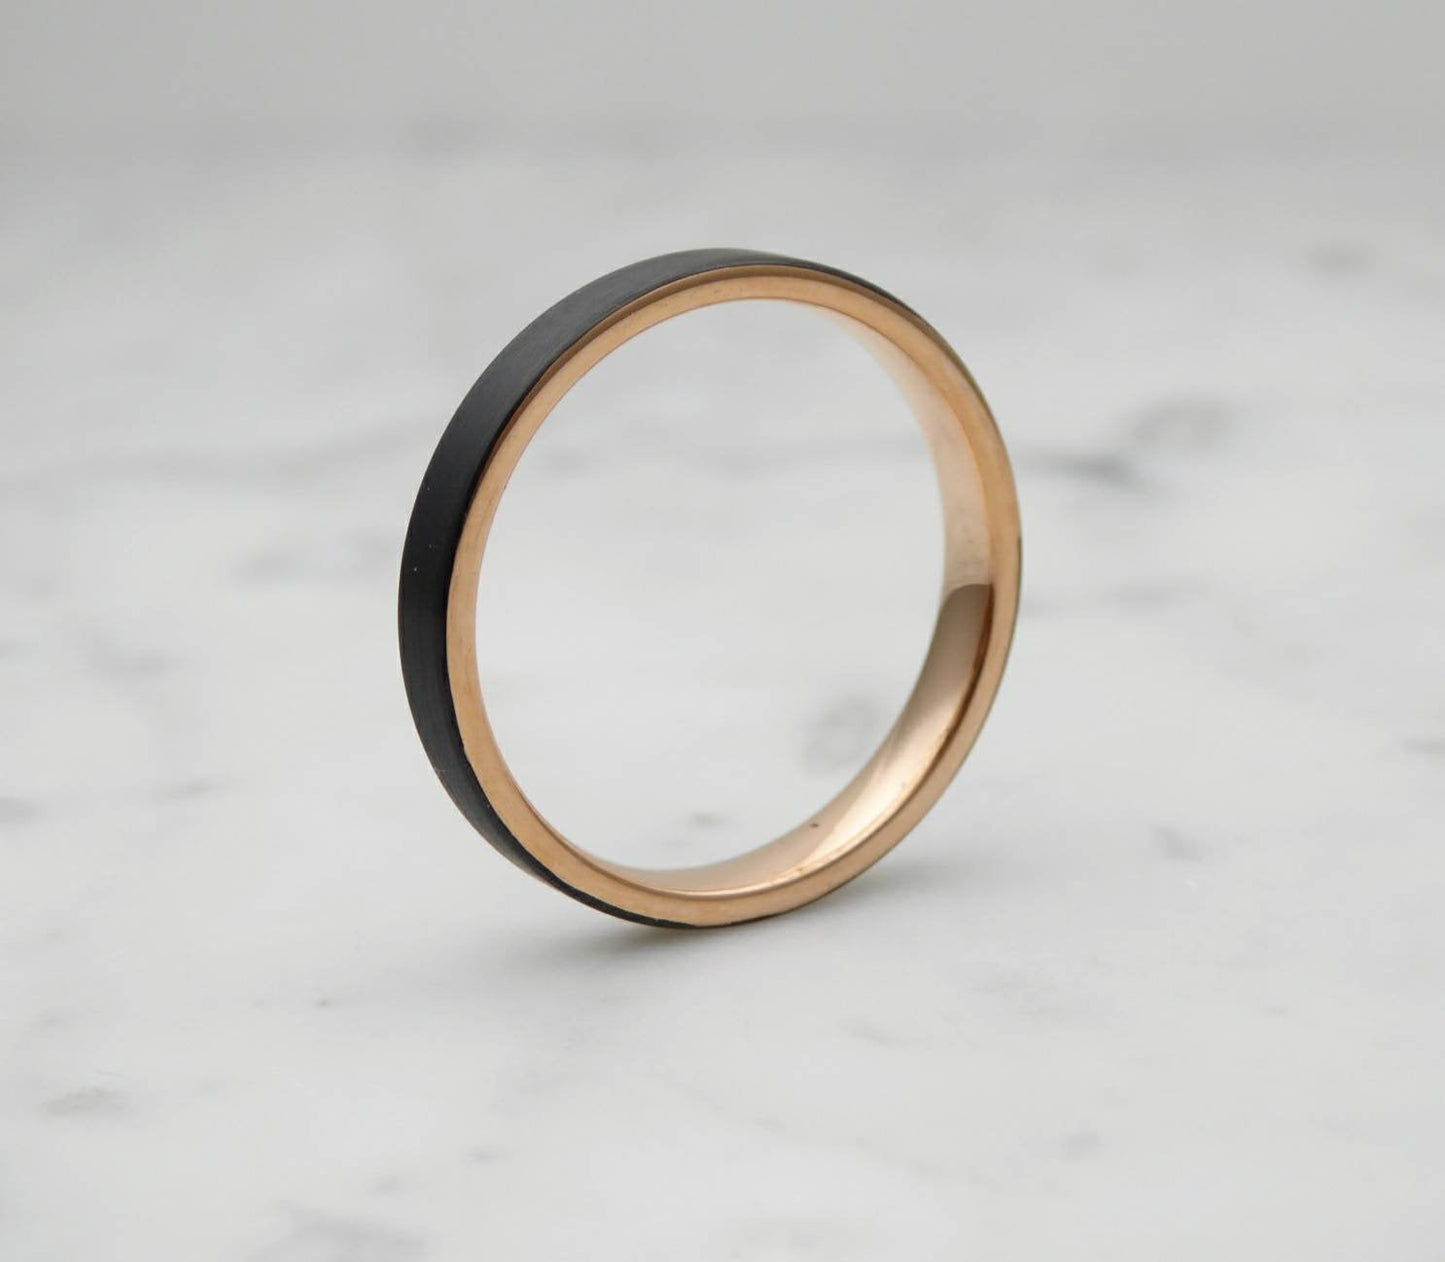 2mm Black Brushed titanium & 18k rose gold wedding ring band for men and women